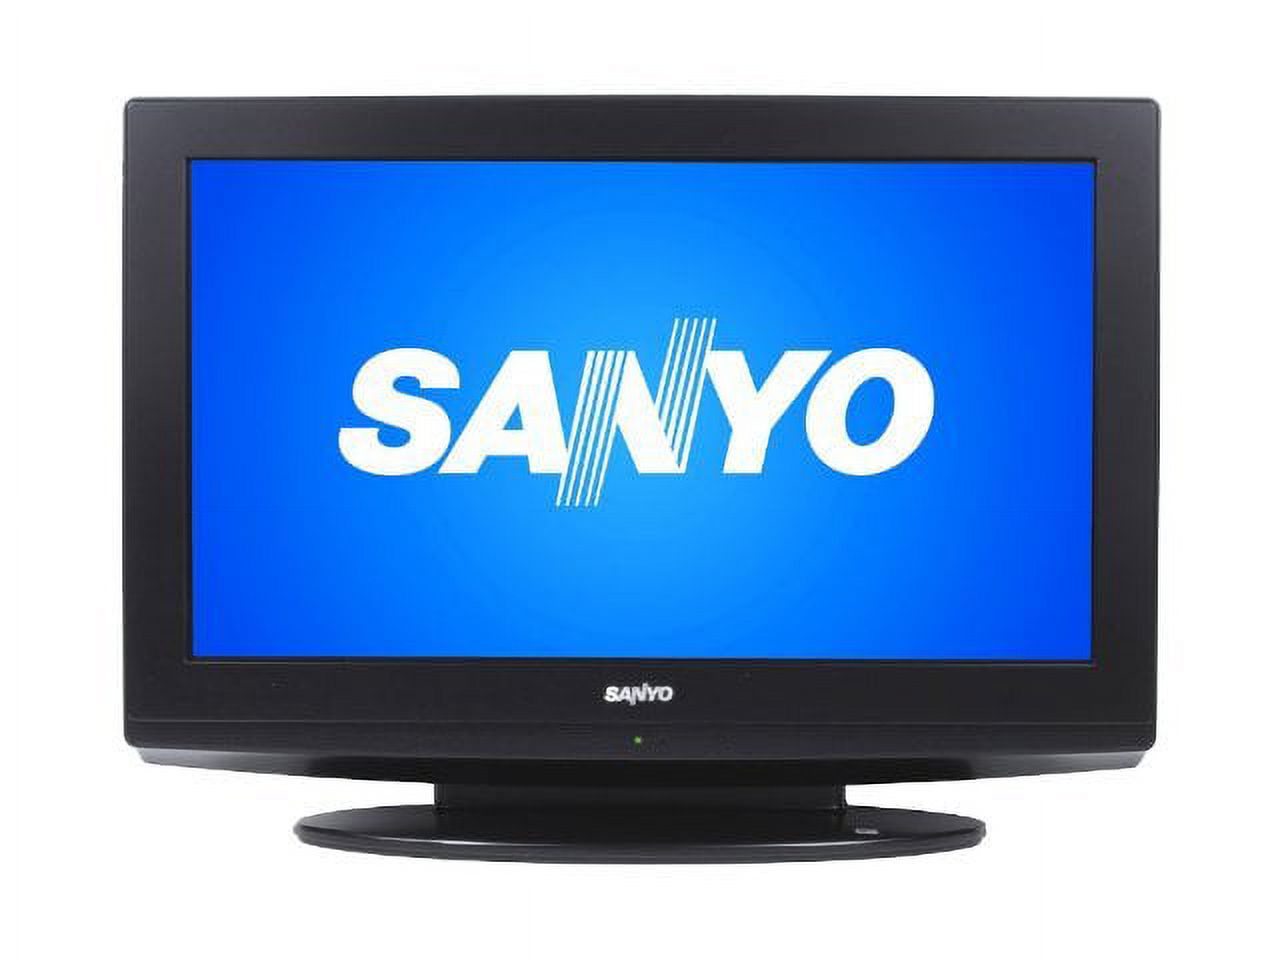 Sanyo DP26649 - 26" Diagonal Class LCD TV - 720p 1366 x 768 - metallic black - image 1 of 2